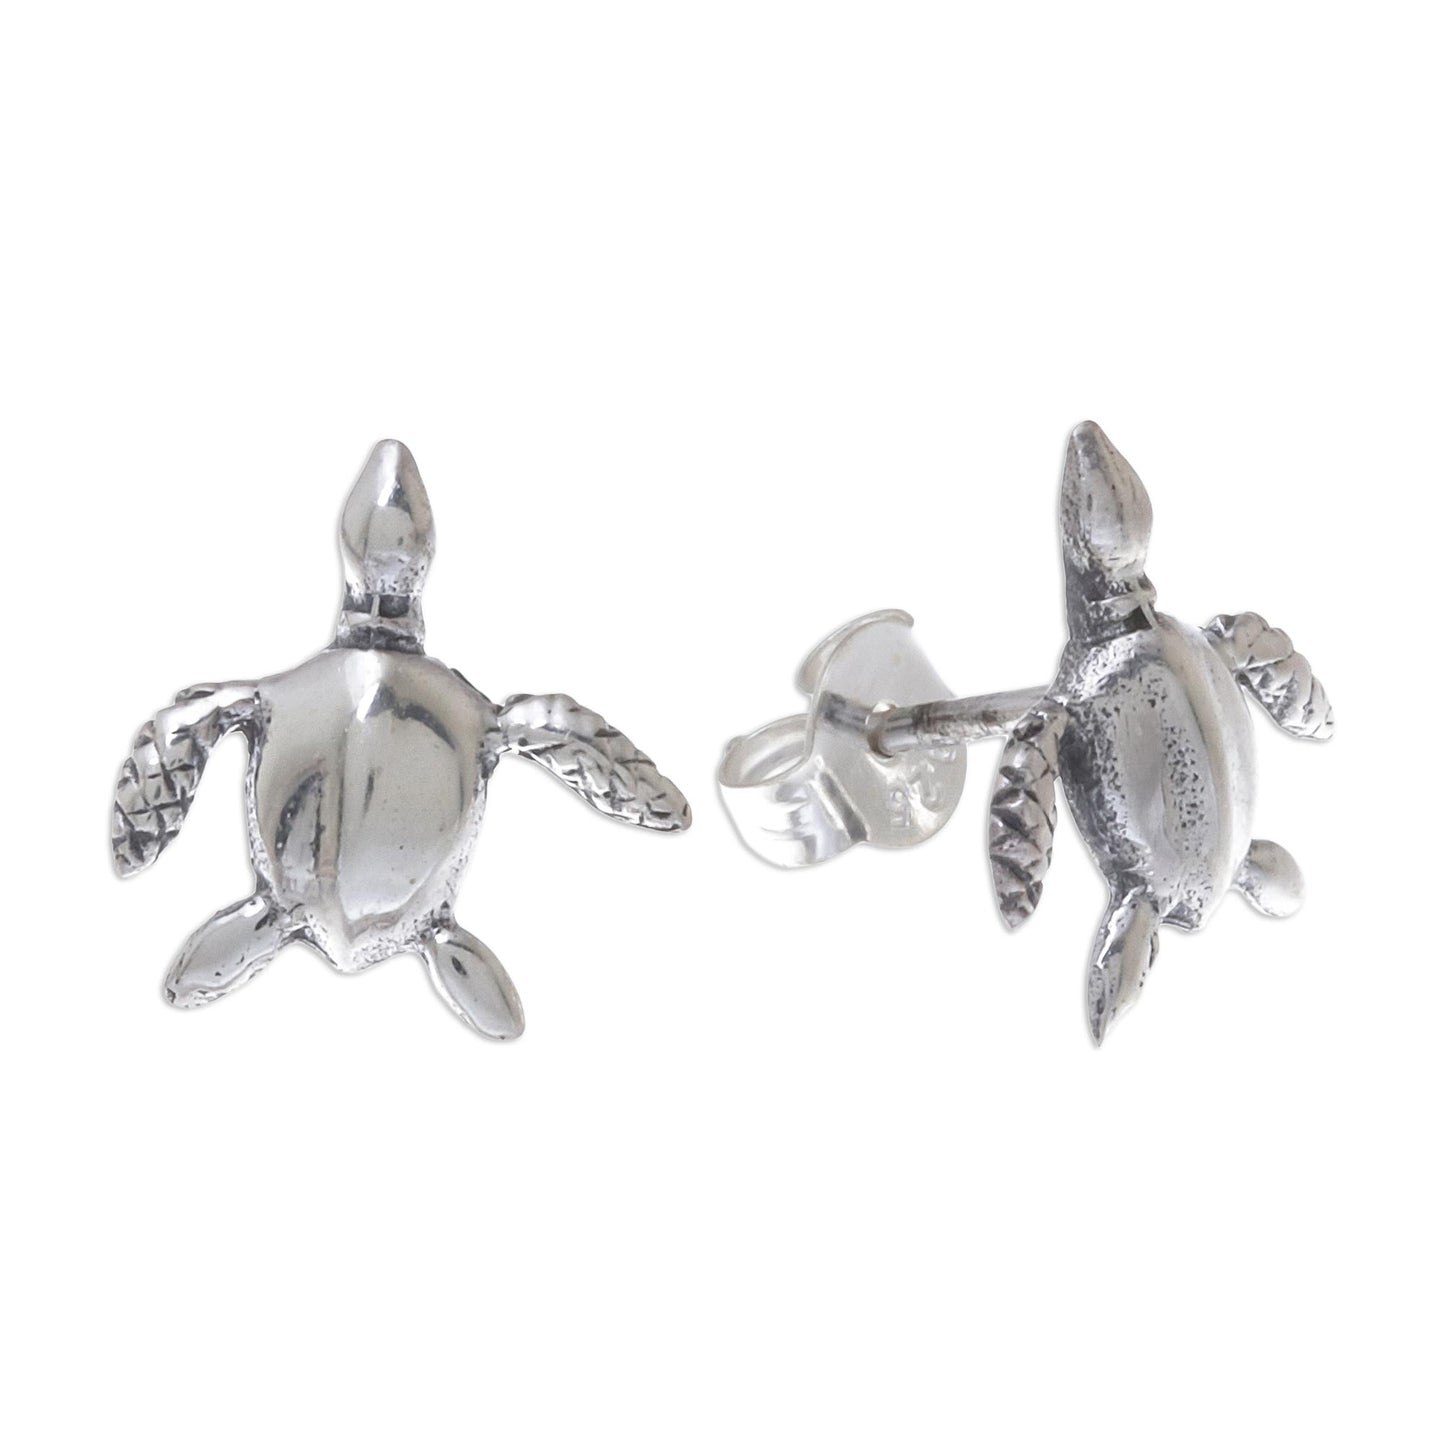 Sea Turtle Bliss Sterling Silver Sea Turtle Stud Earrings from Thailand